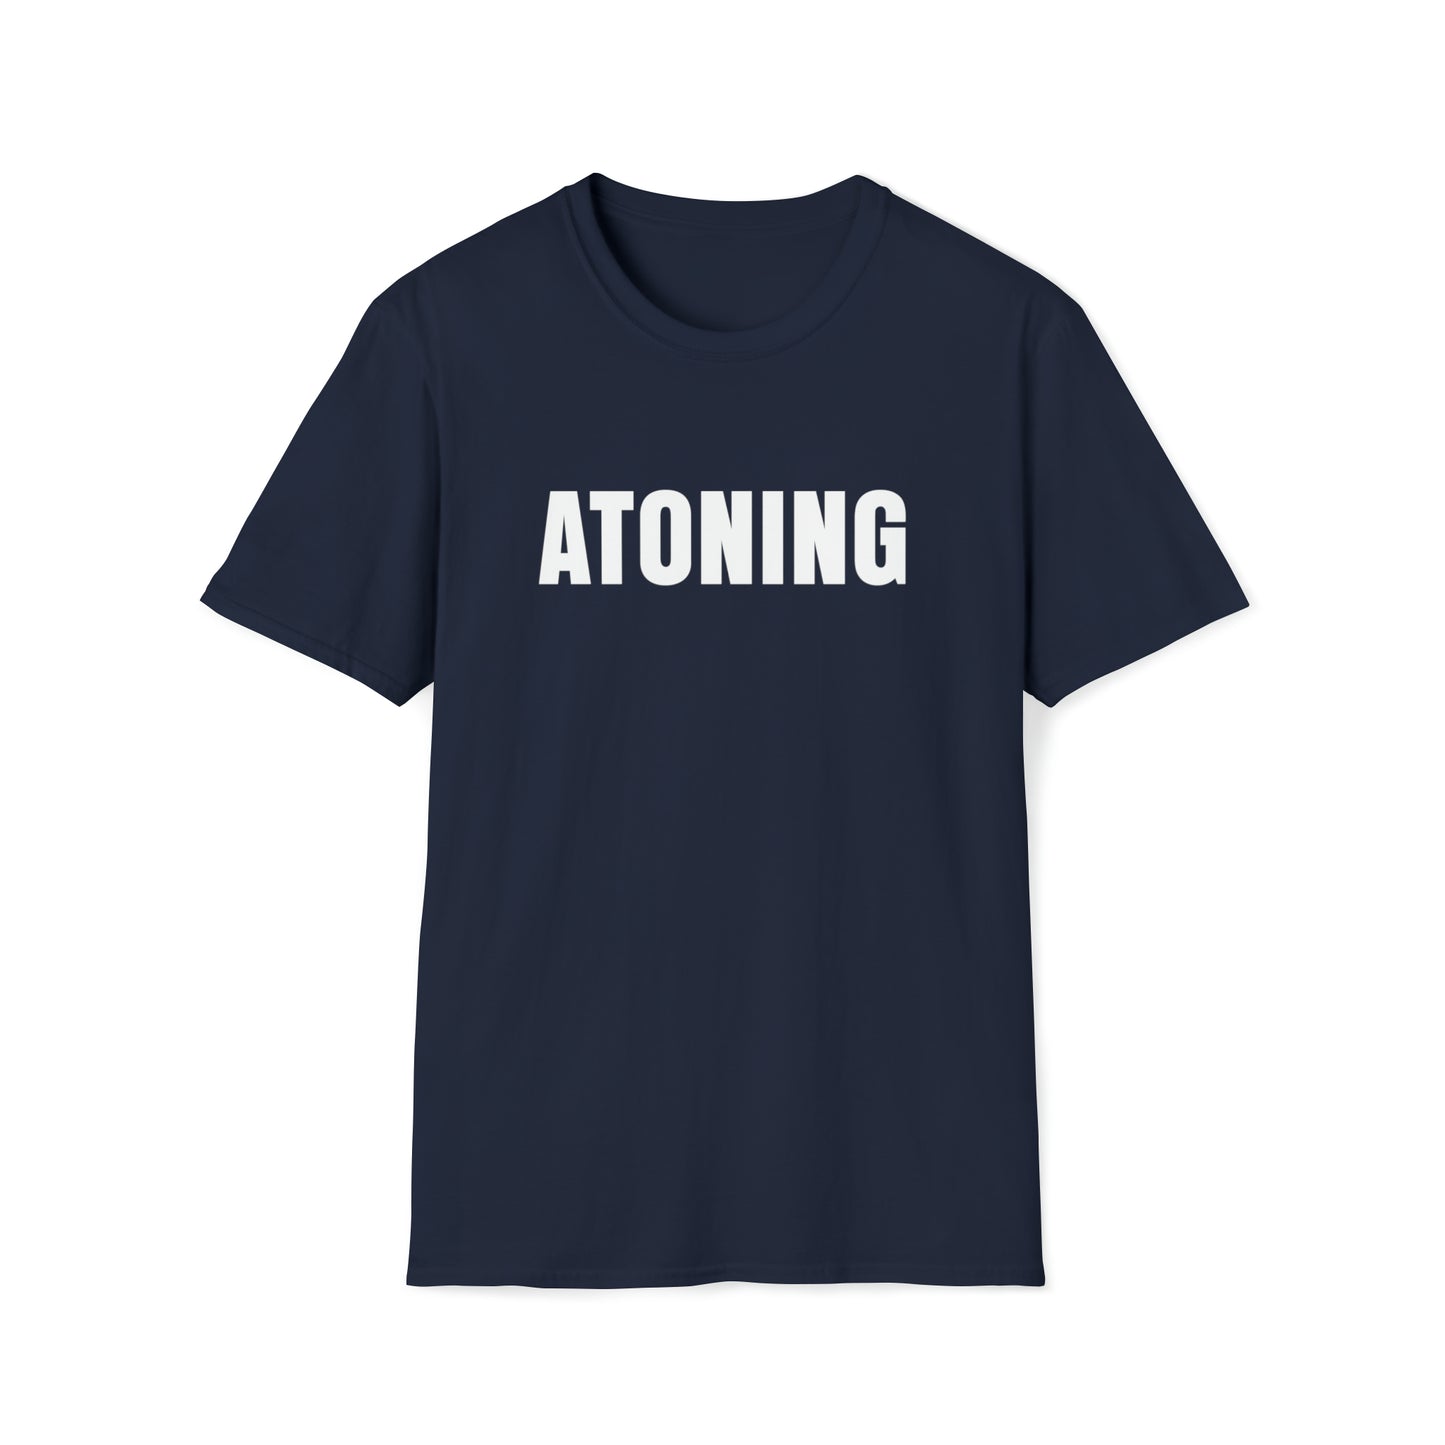 Atoning T-Shirt (Order before 9/17)